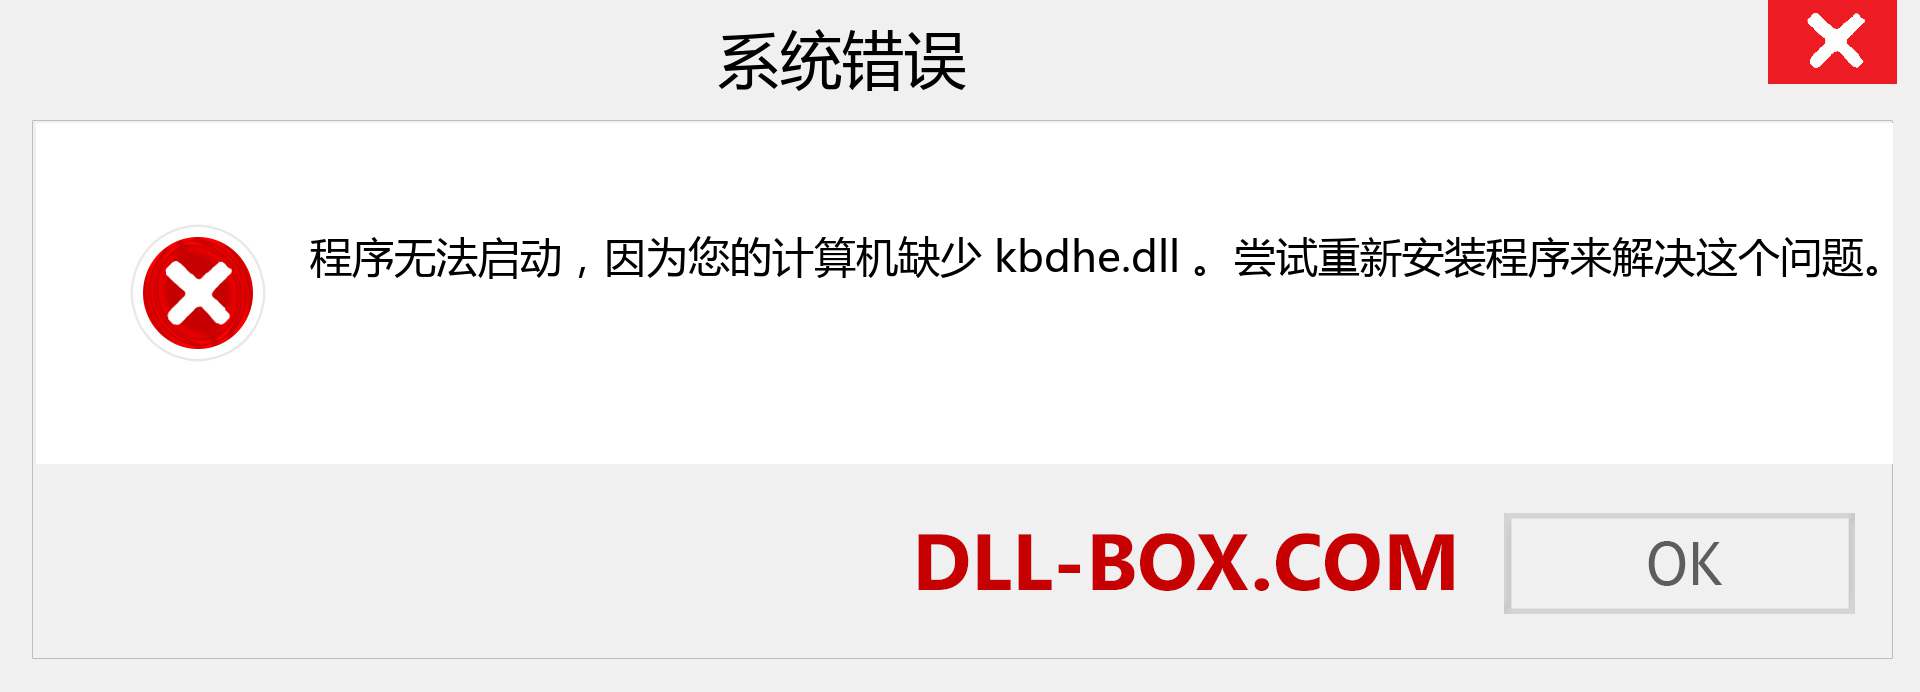 kbdhe.dll 文件丢失？。 适用于 Windows 7、8、10 的下载 - 修复 Windows、照片、图像上的 kbdhe dll 丢失错误